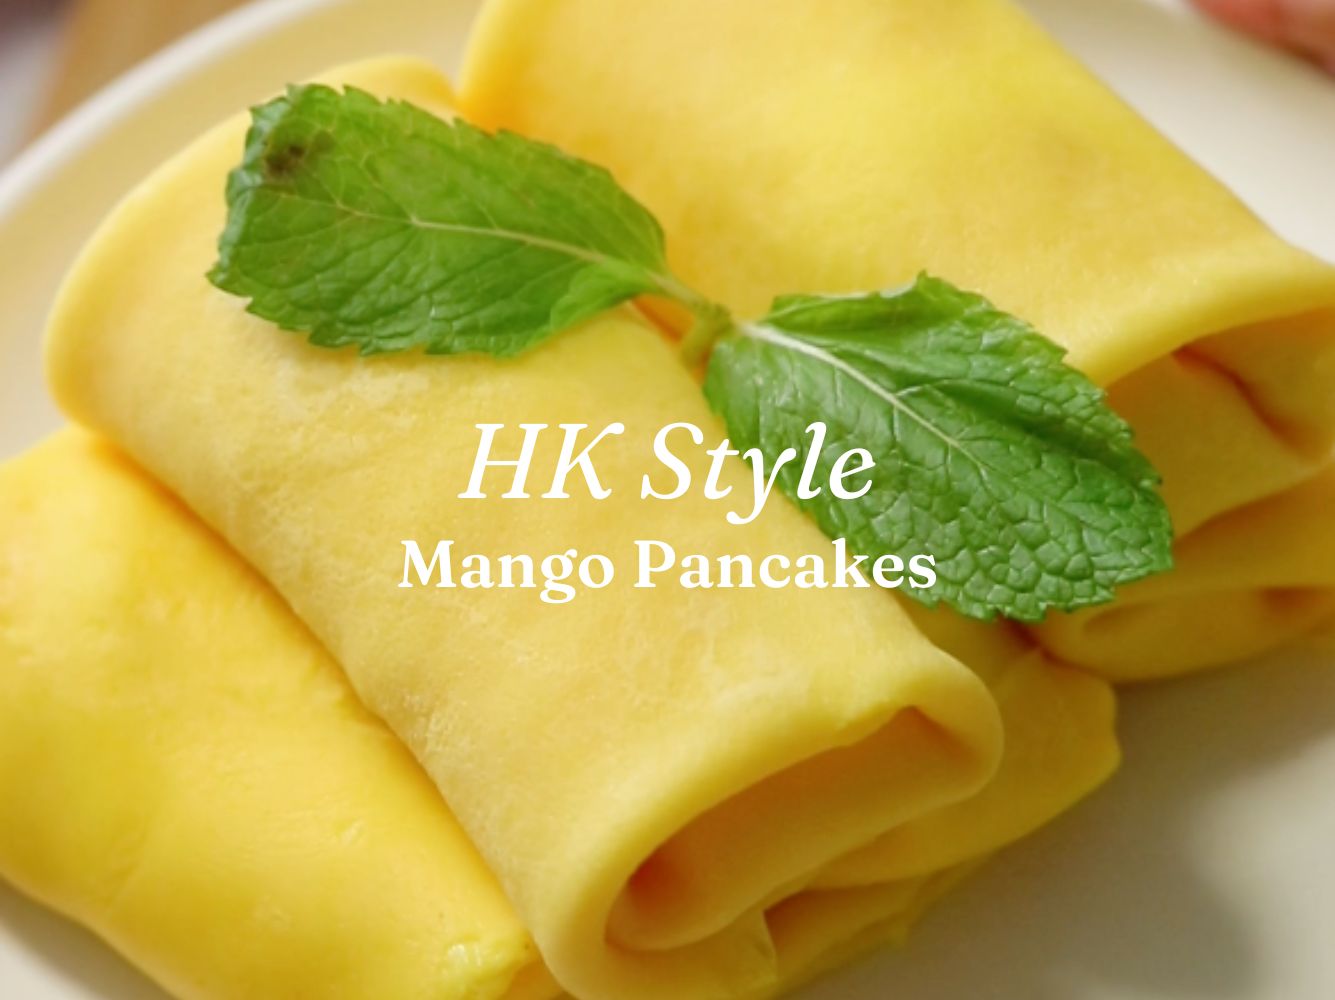 HK Style Mango Pancakes